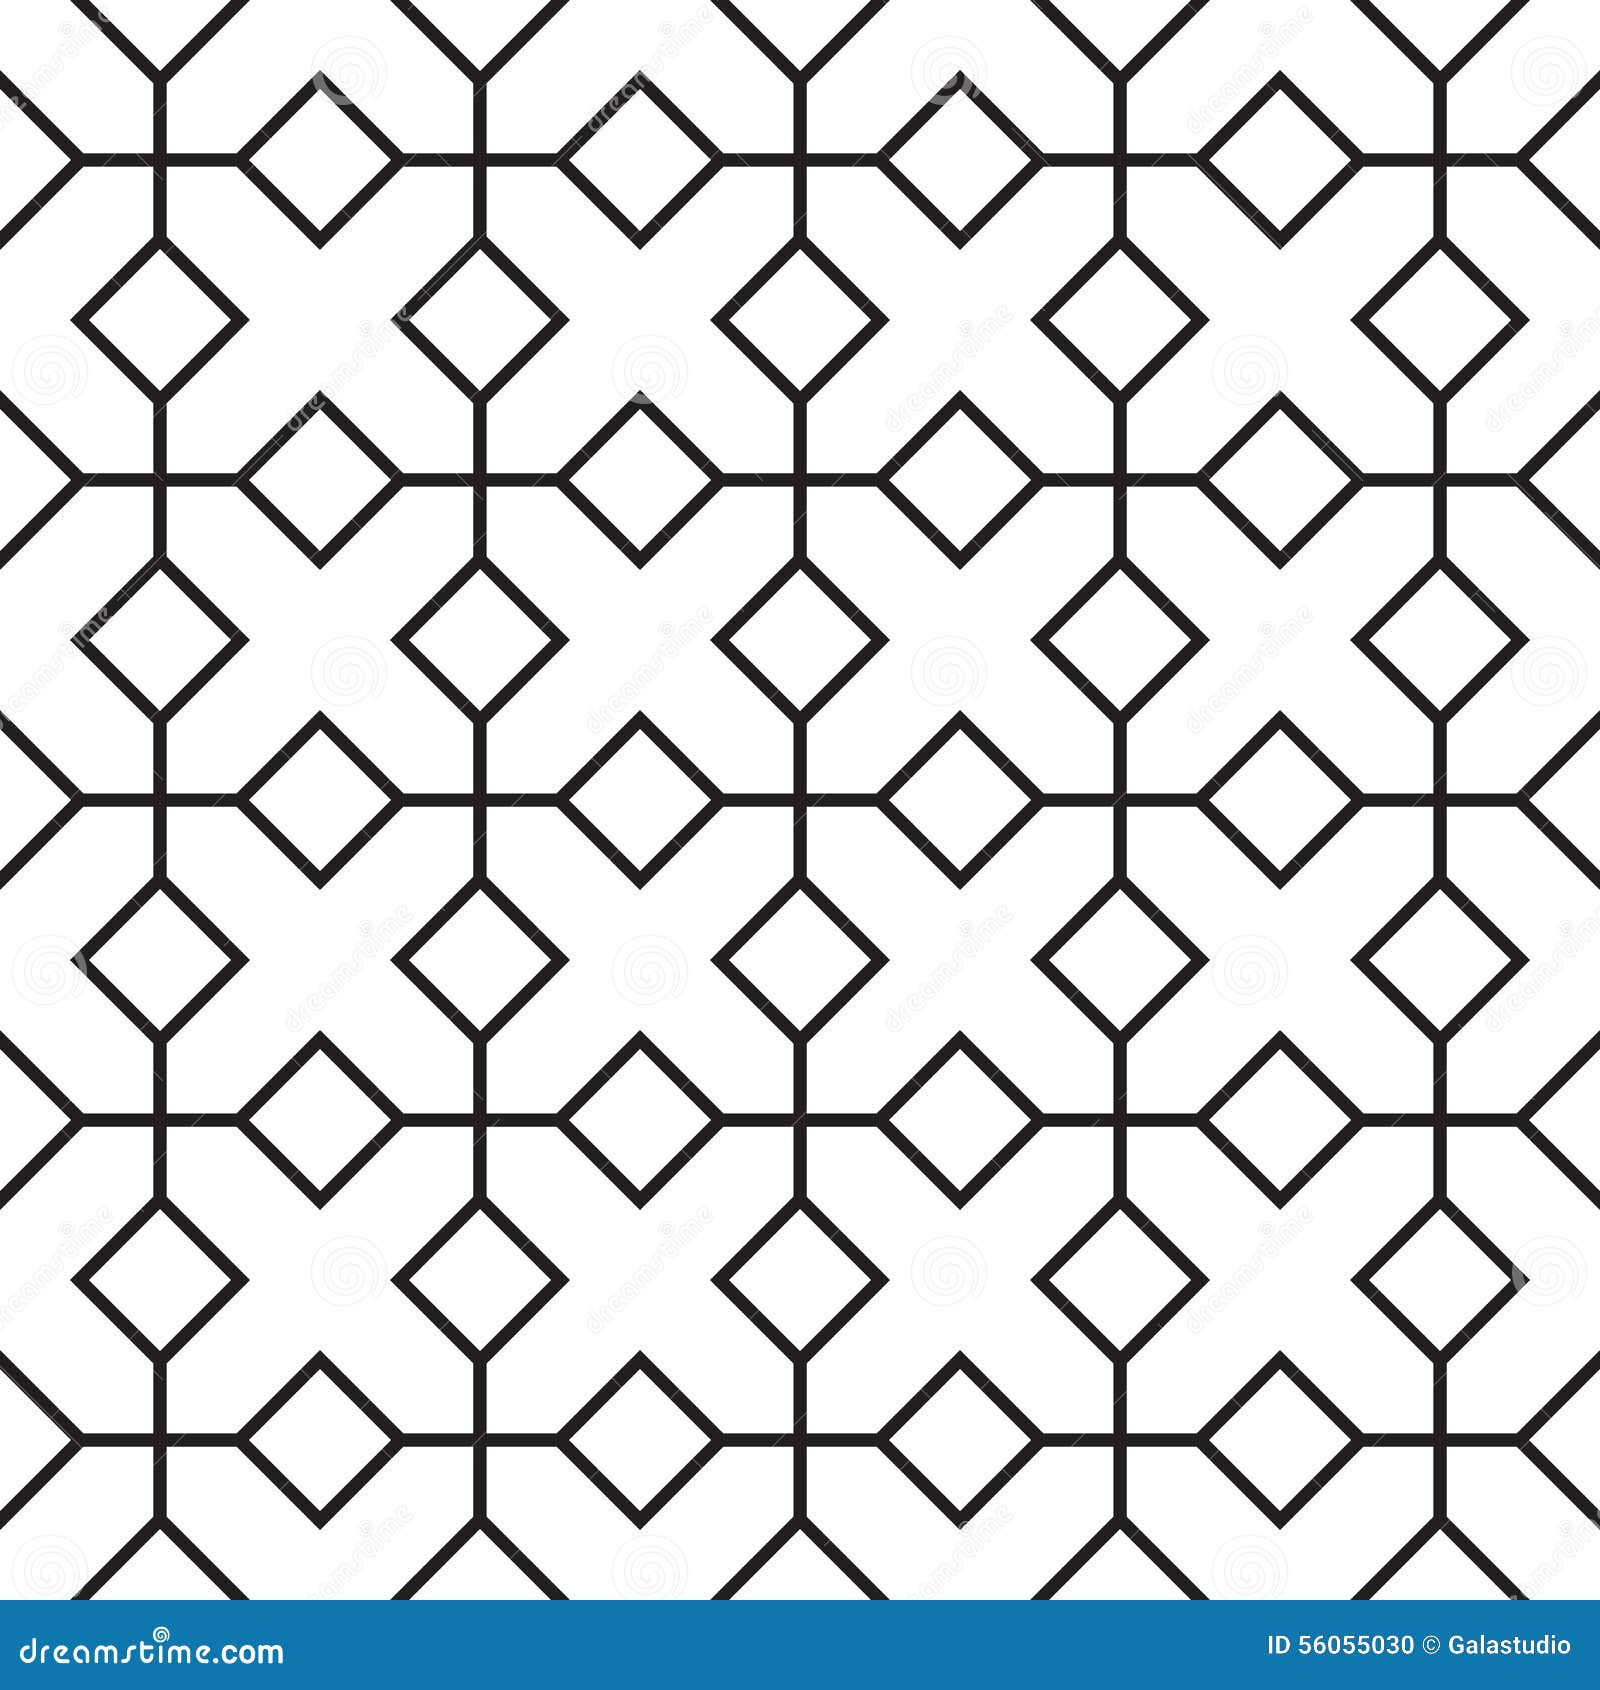 seamless girih geometric pattern.